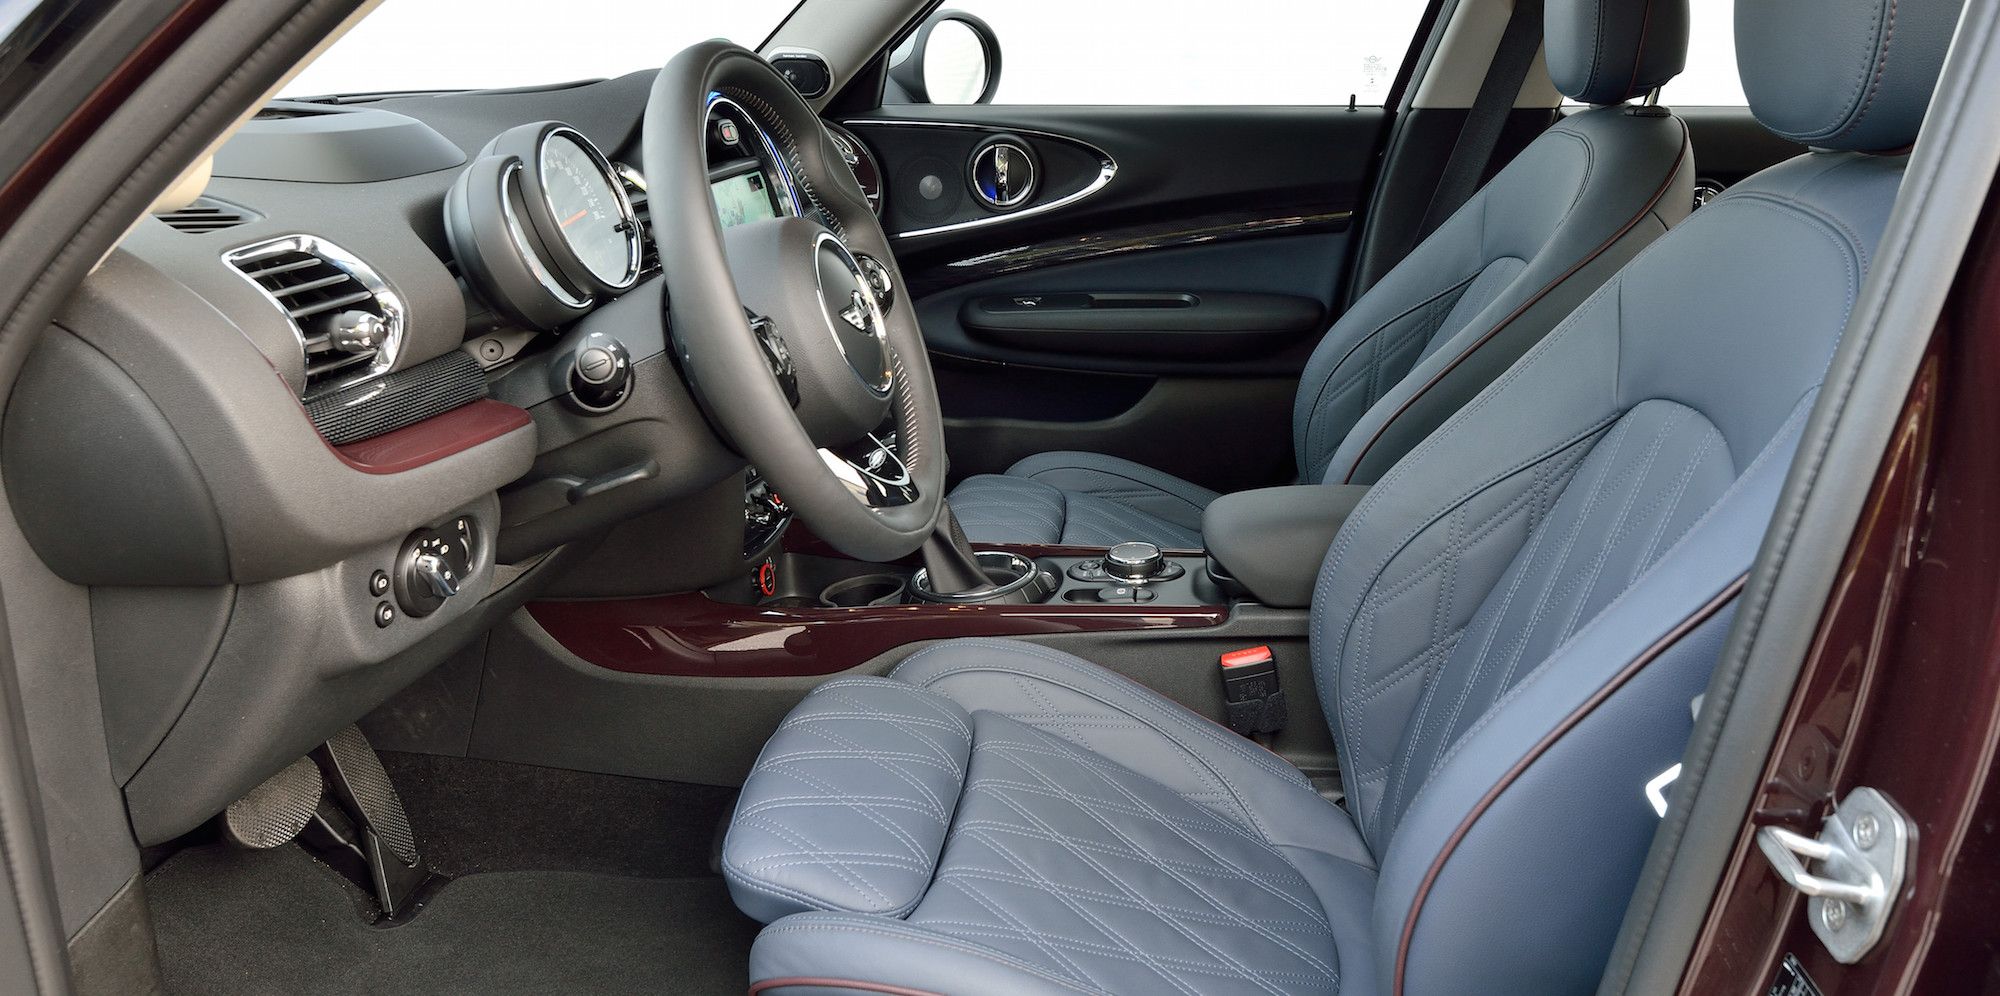 2016 Mini Cooper S Clubman Front Seats Interior (View 15 of 17)